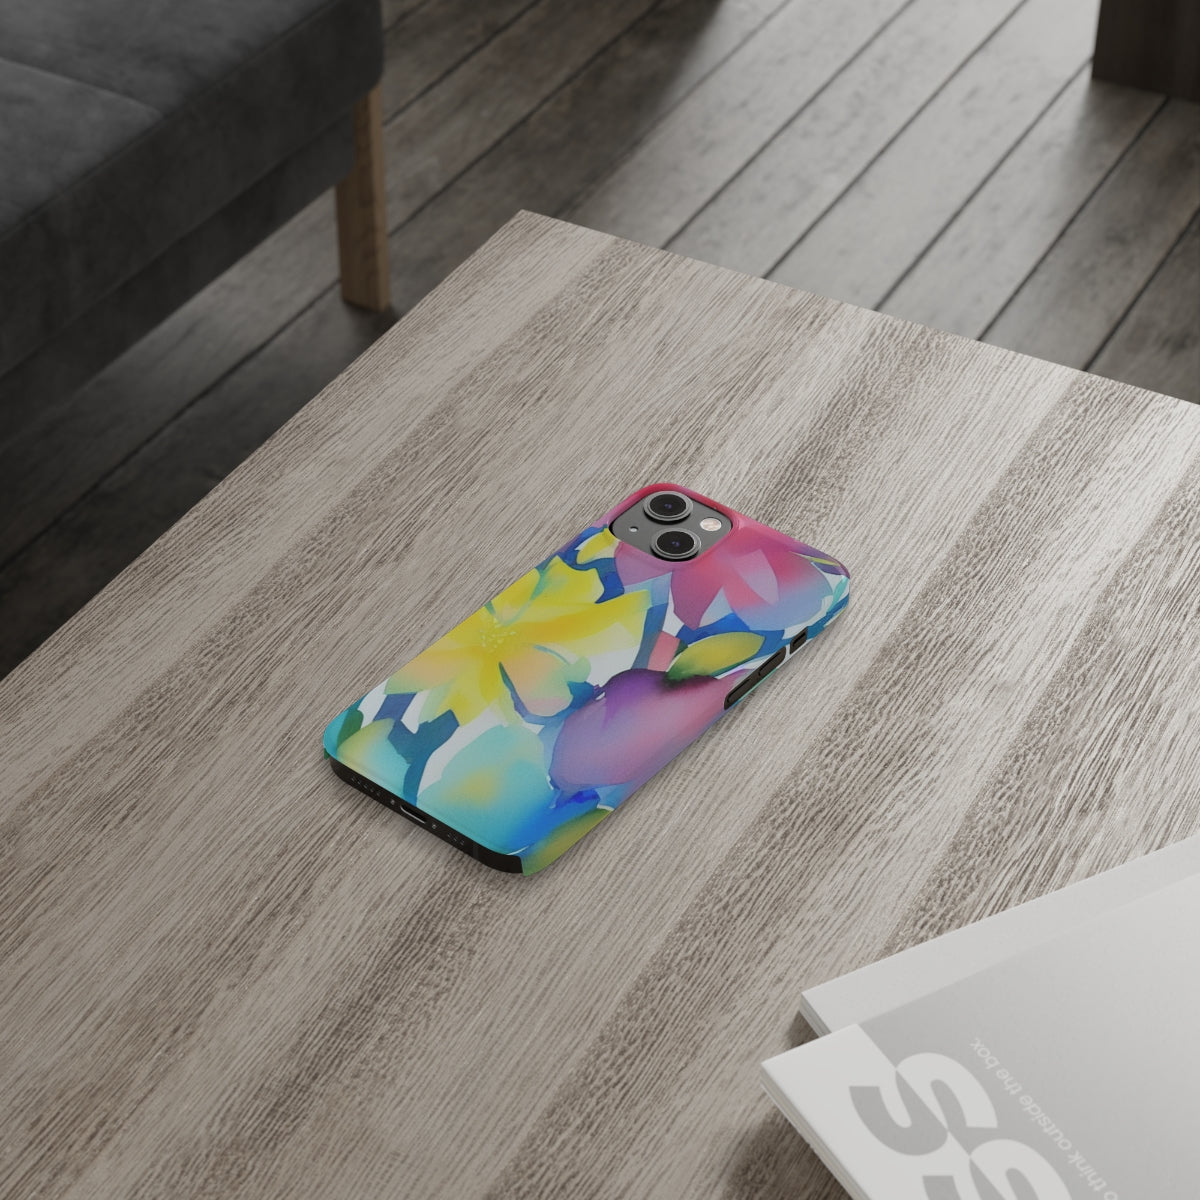 Elegant Watercolour Flower Design Phone Case For iPhone And Samsung Phones